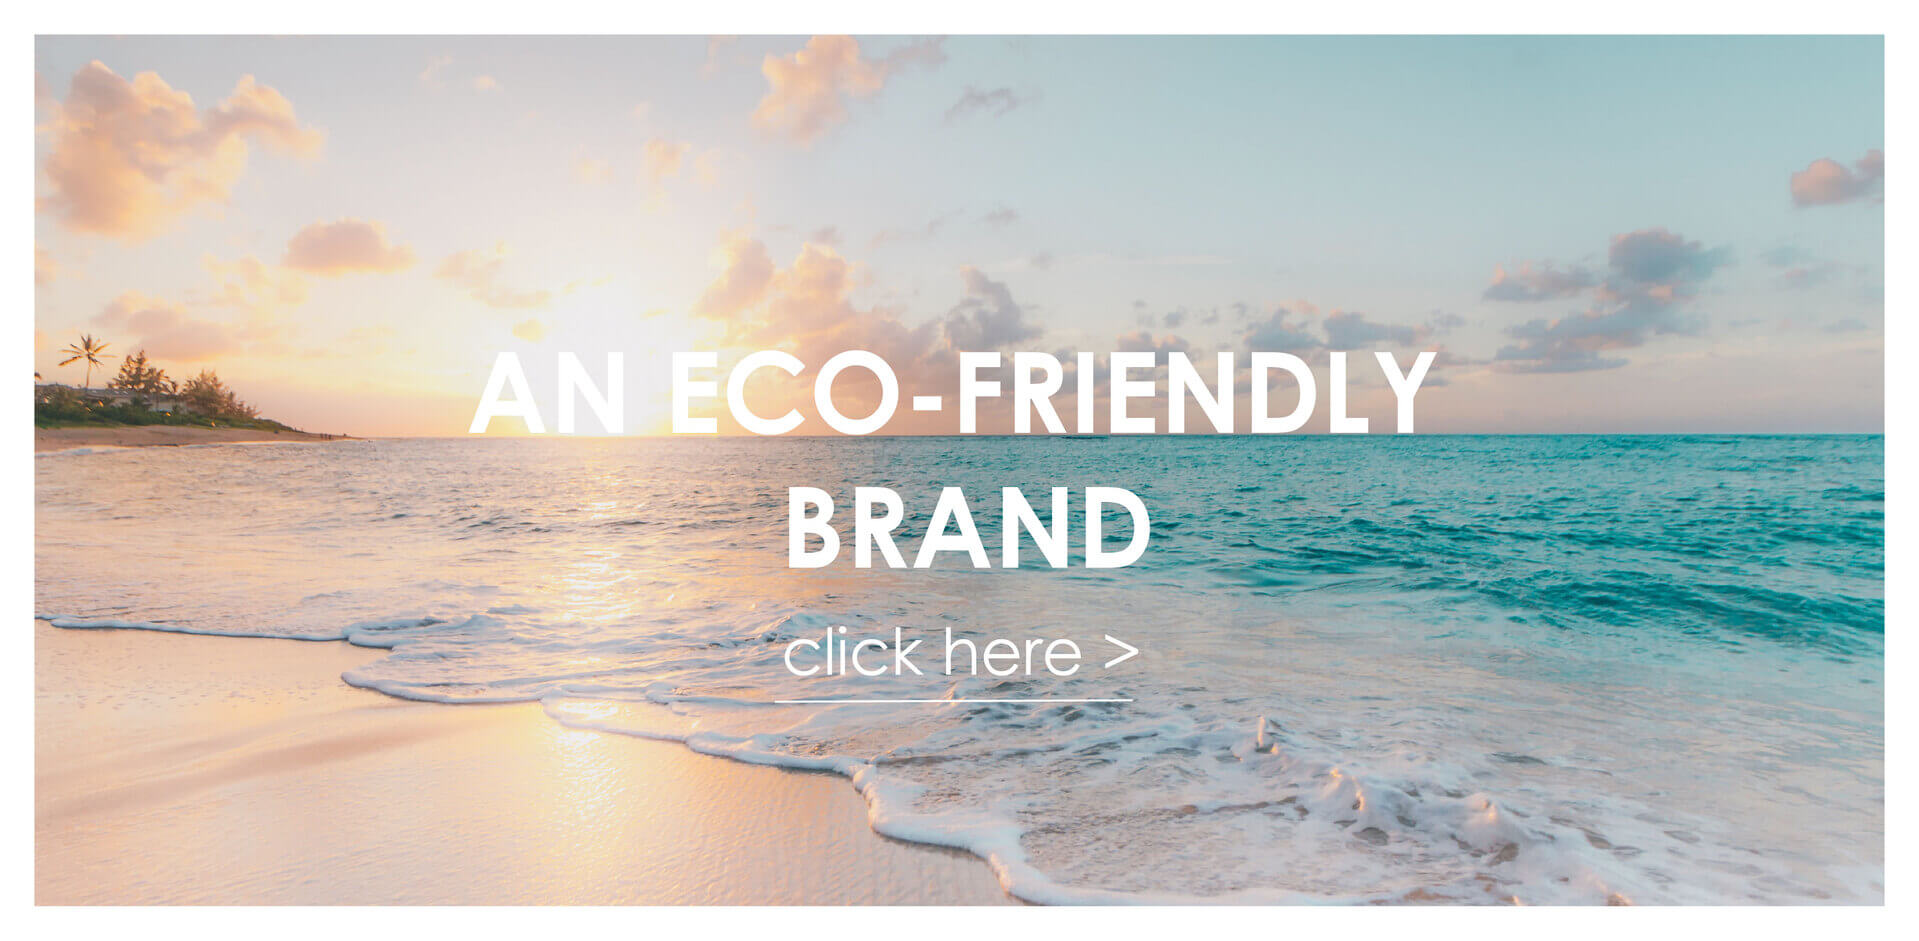 An eco-friendly brand